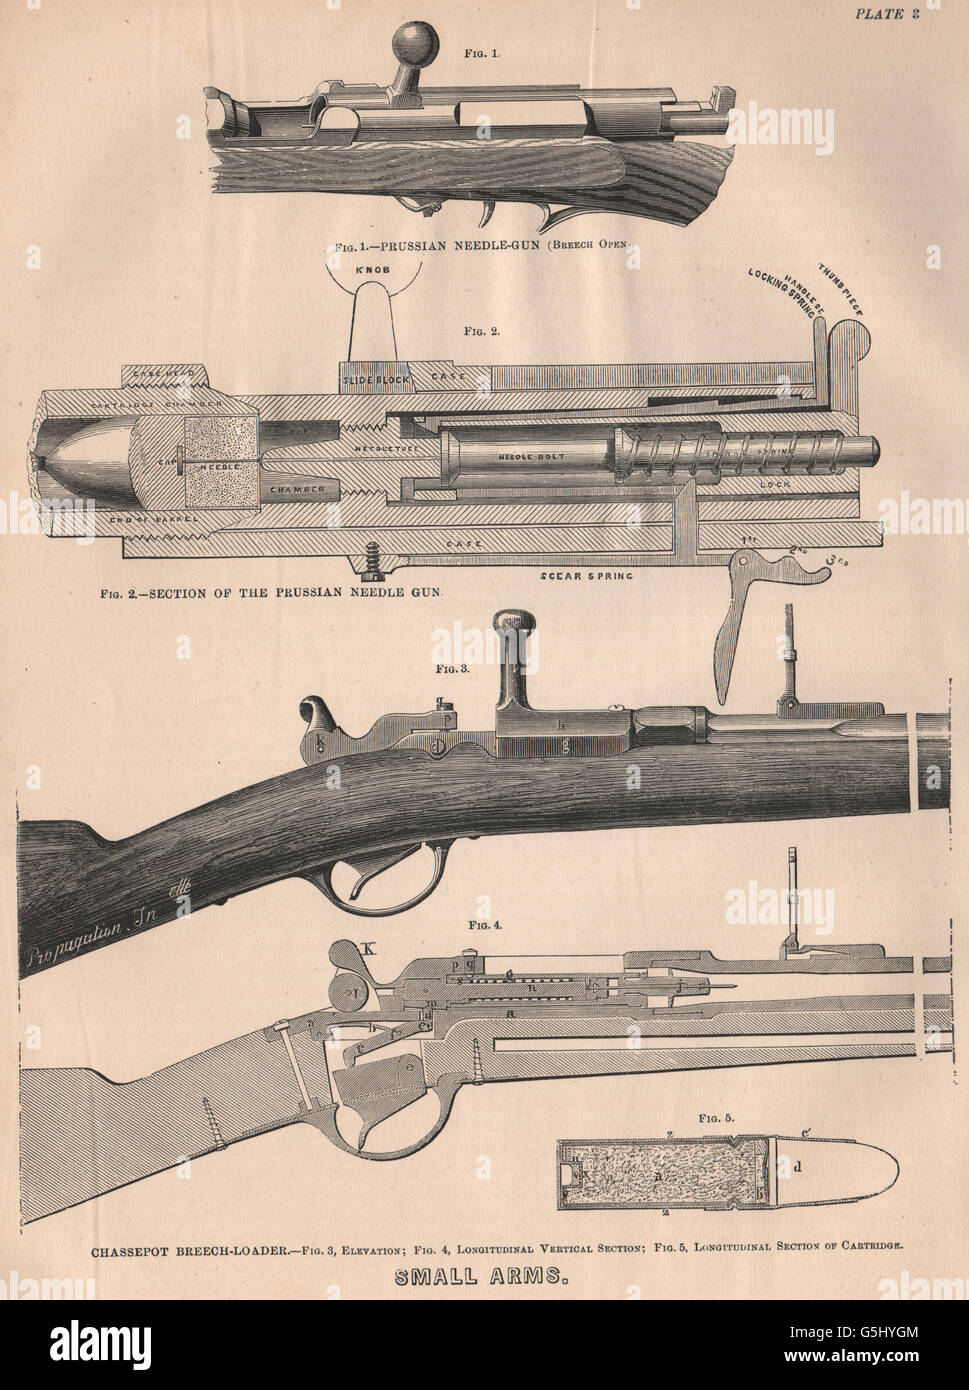 FRANCO-PRUSSIAN WAR: Small Arms. Prussian Needle-gun. Cartridge. Militaria, 1875 Stock Photo